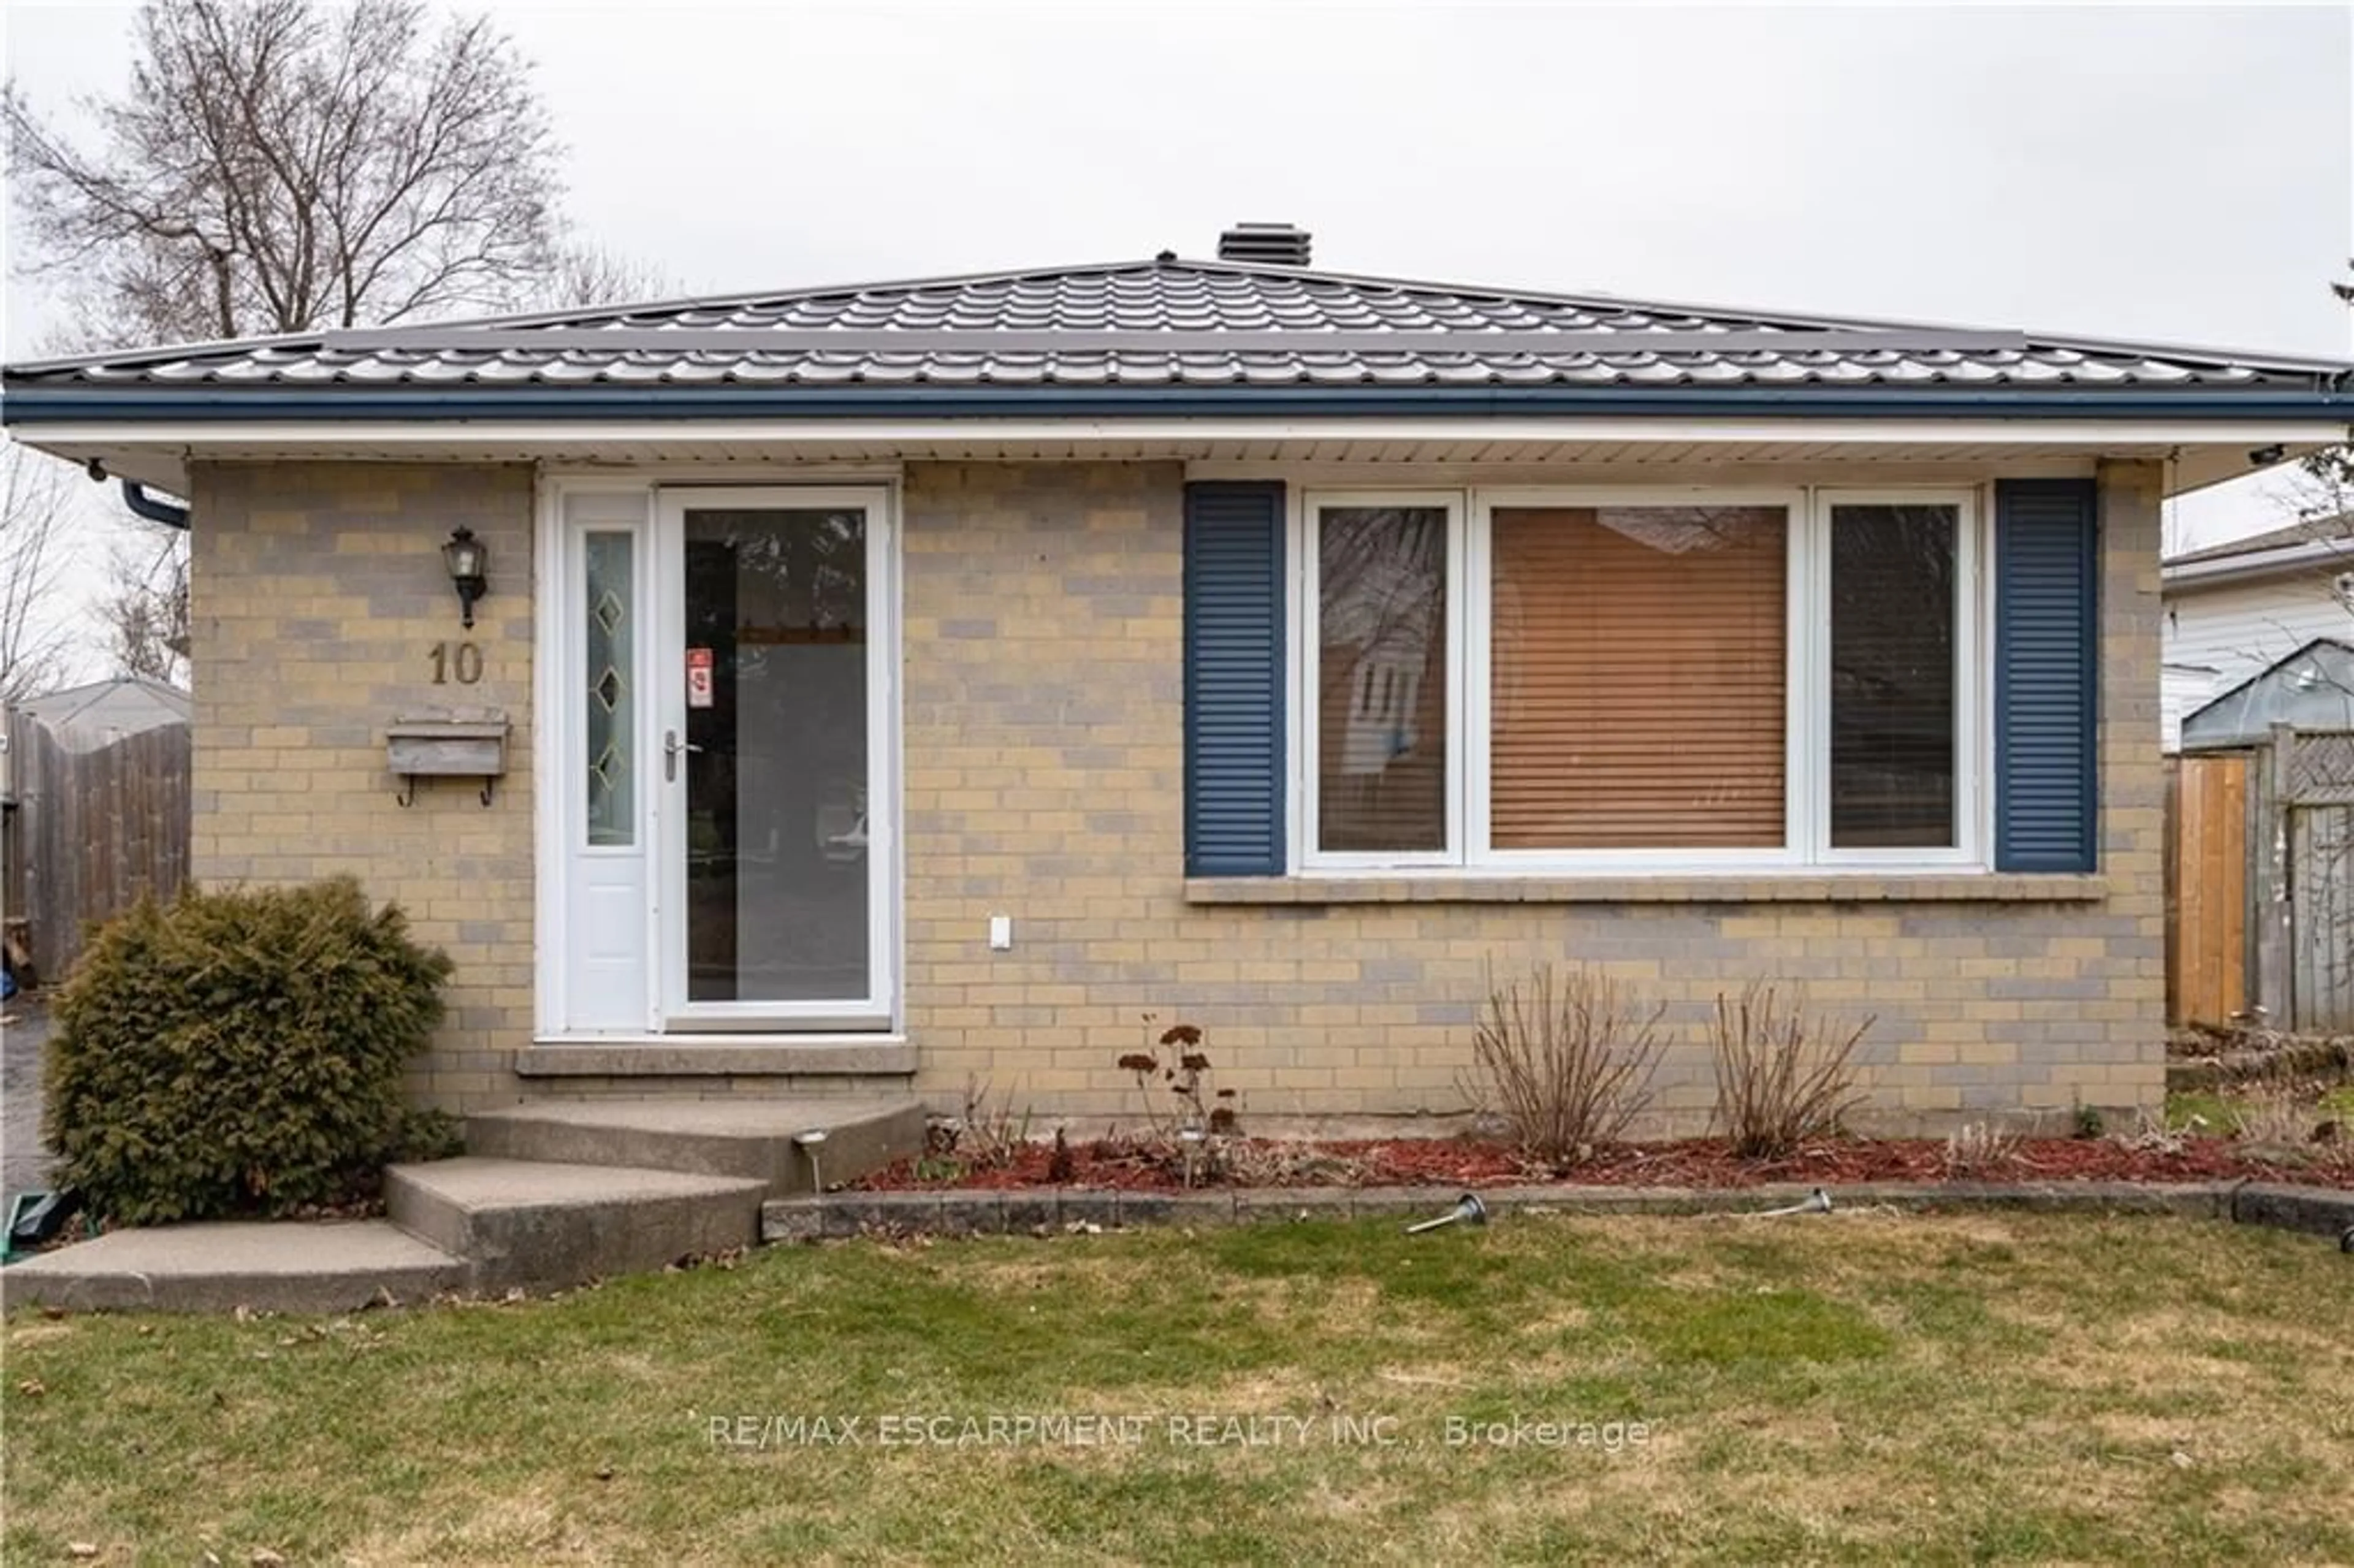 Home with brick exterior material for 10 William Johnson St, Hamilton Ontario L8J 1B1